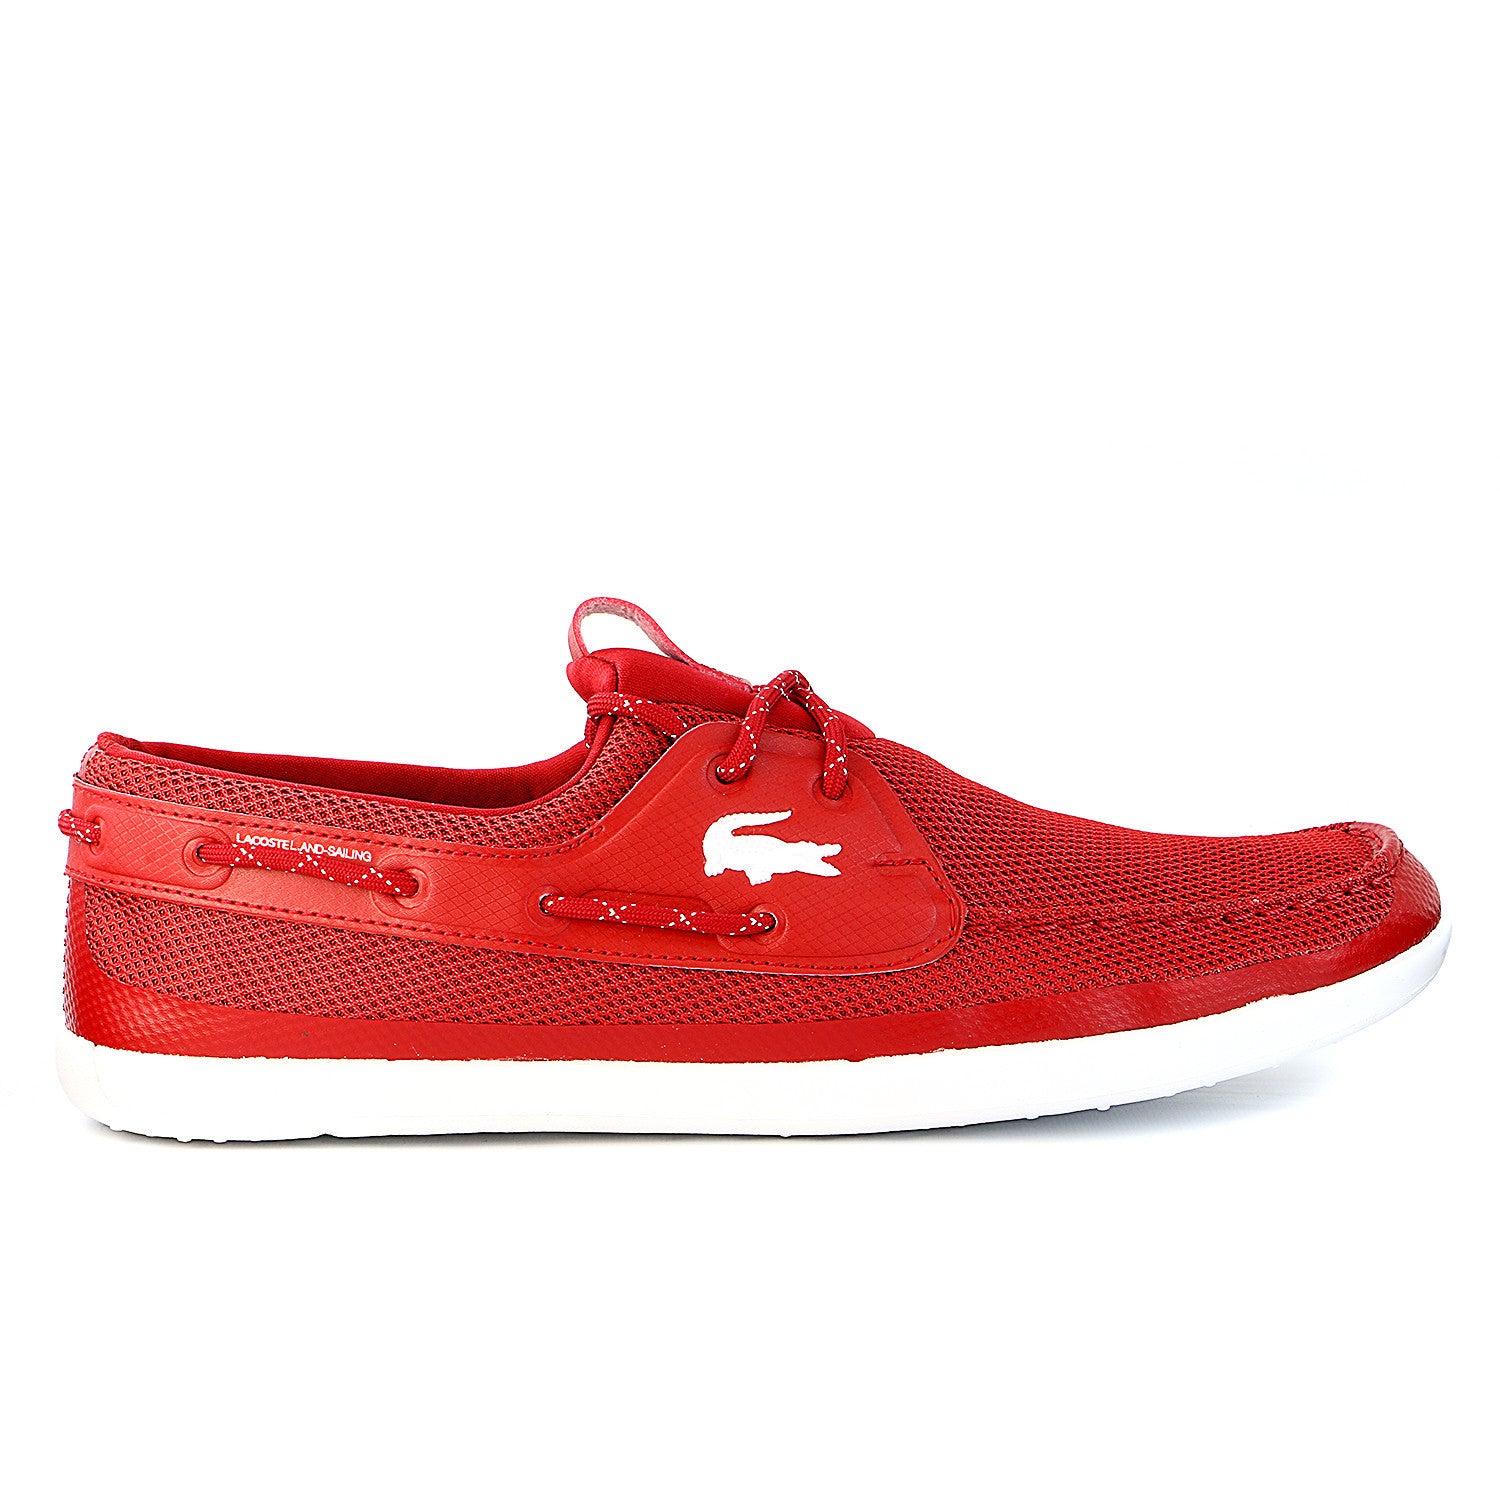 Landsailing Boat Sneaker Shoes - Red Mens - Shoplifestyle